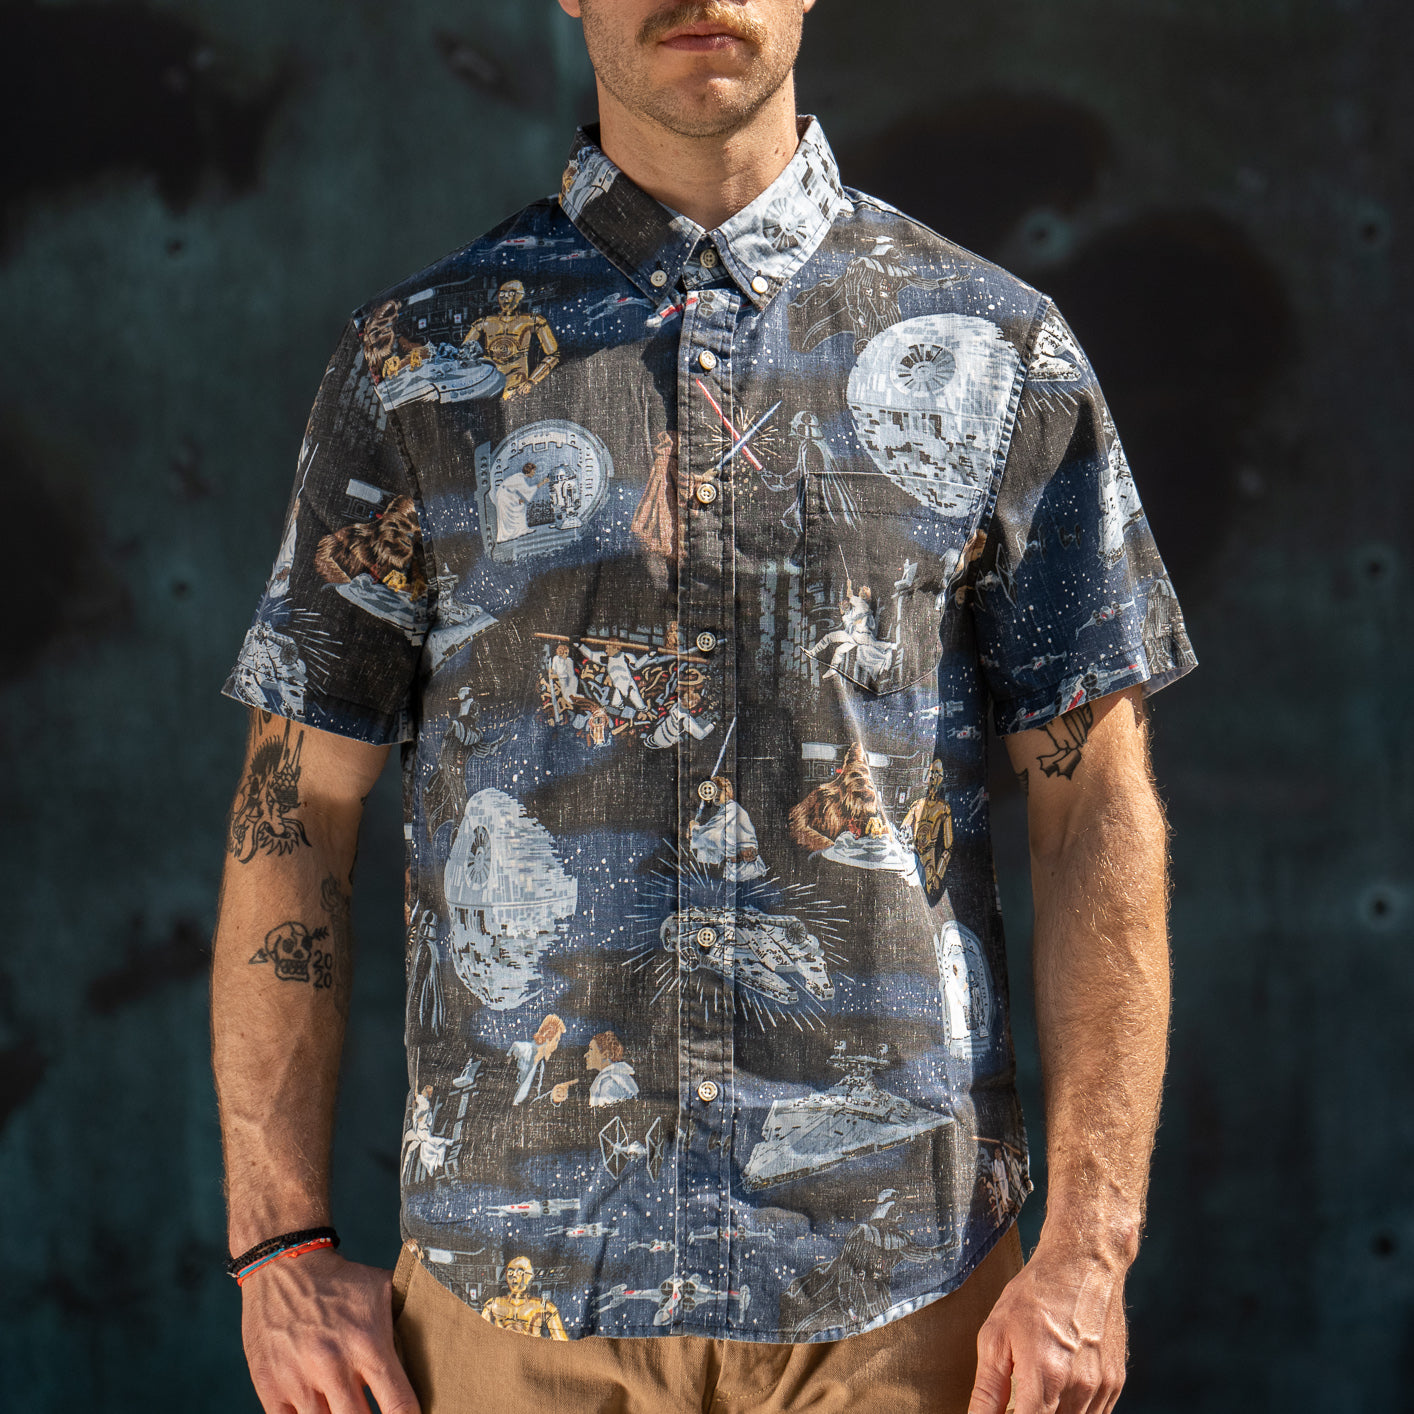 Reyn Spooner Men's Shirt - Blue - XL